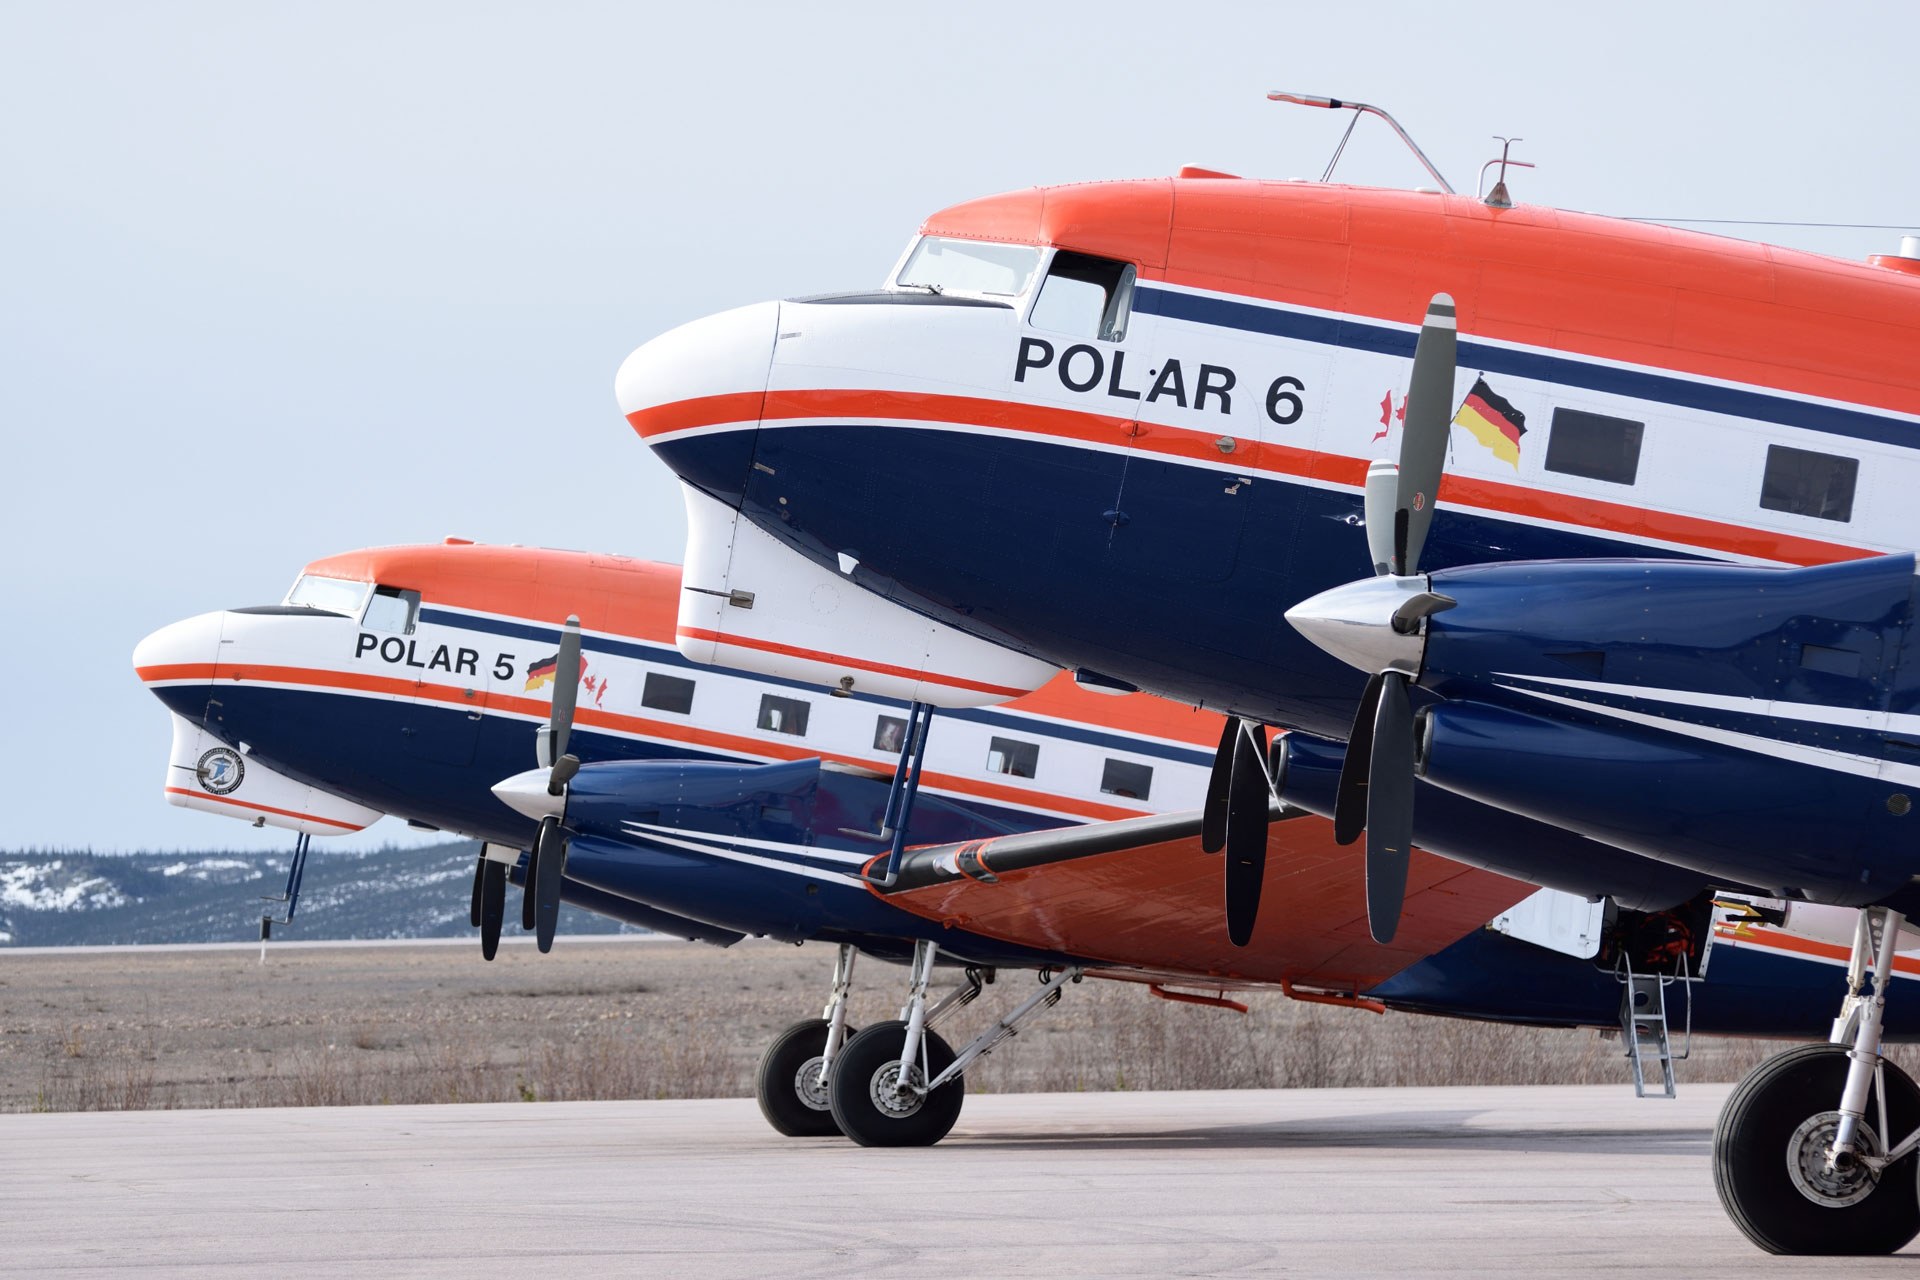 Polarflugzeuge Polar5 und Polar6